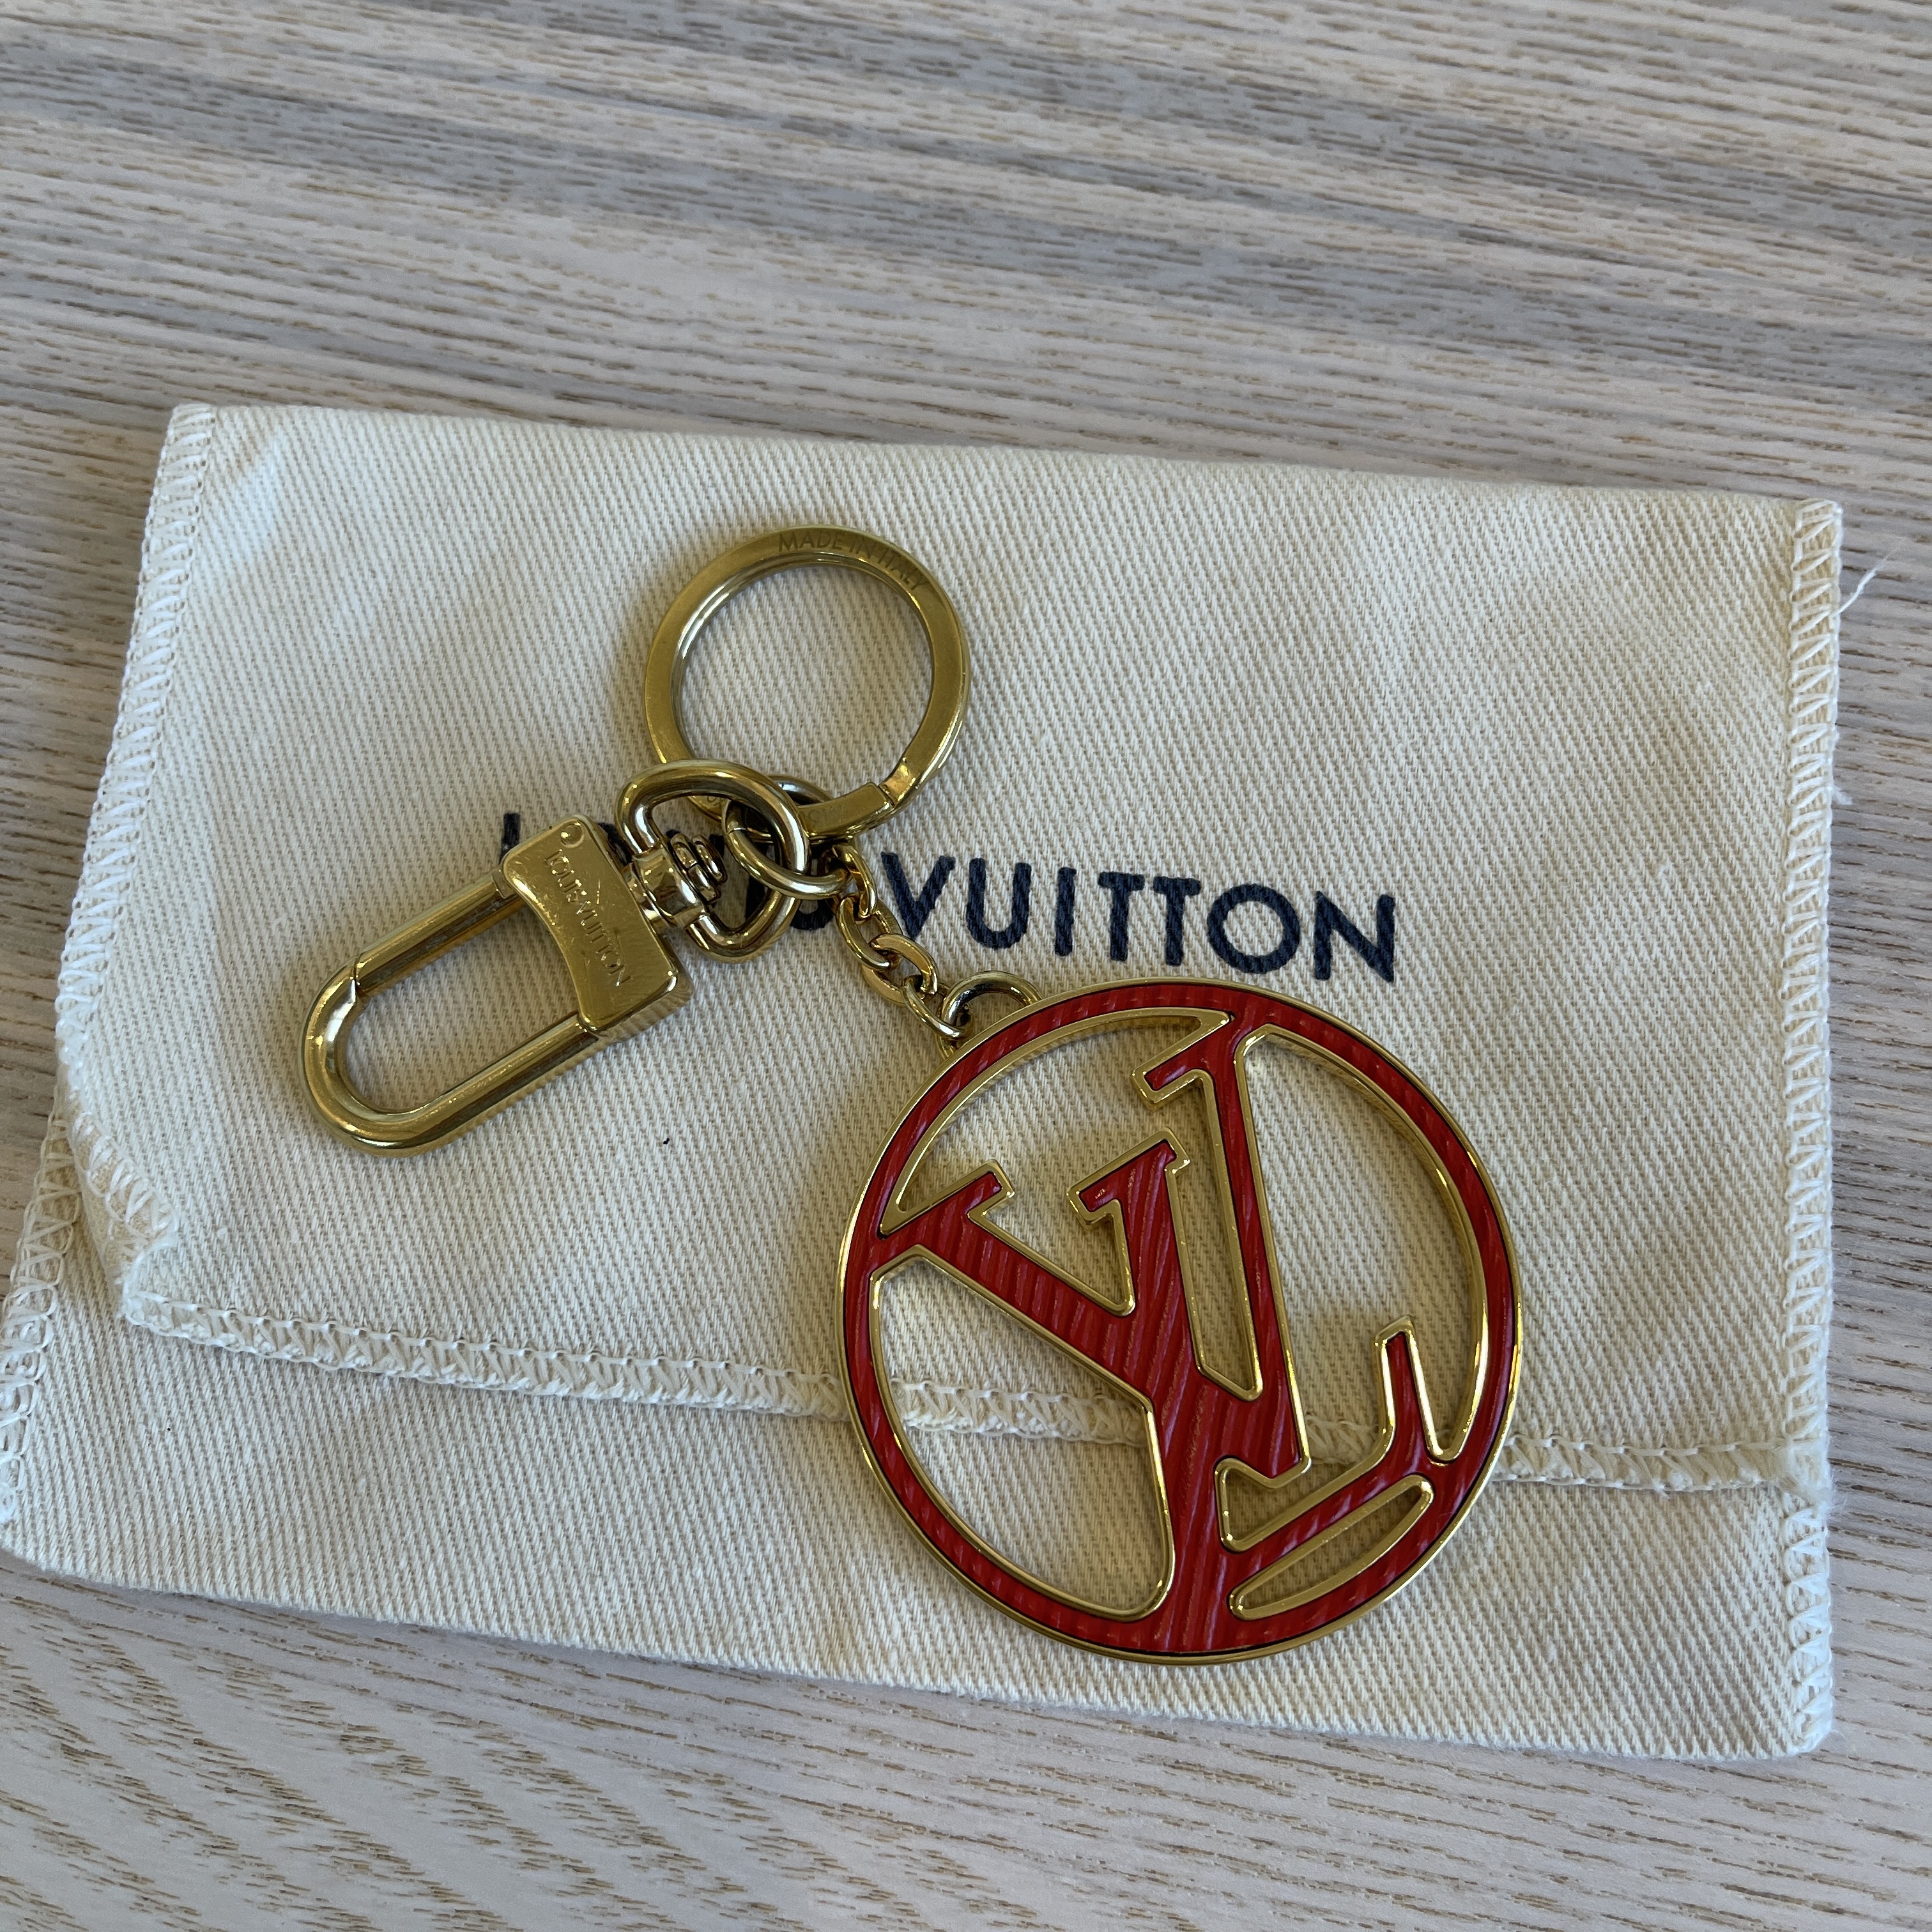 Shop Louis Vuitton MONOGRAM Lv Circle Bag Charm & Key Holder